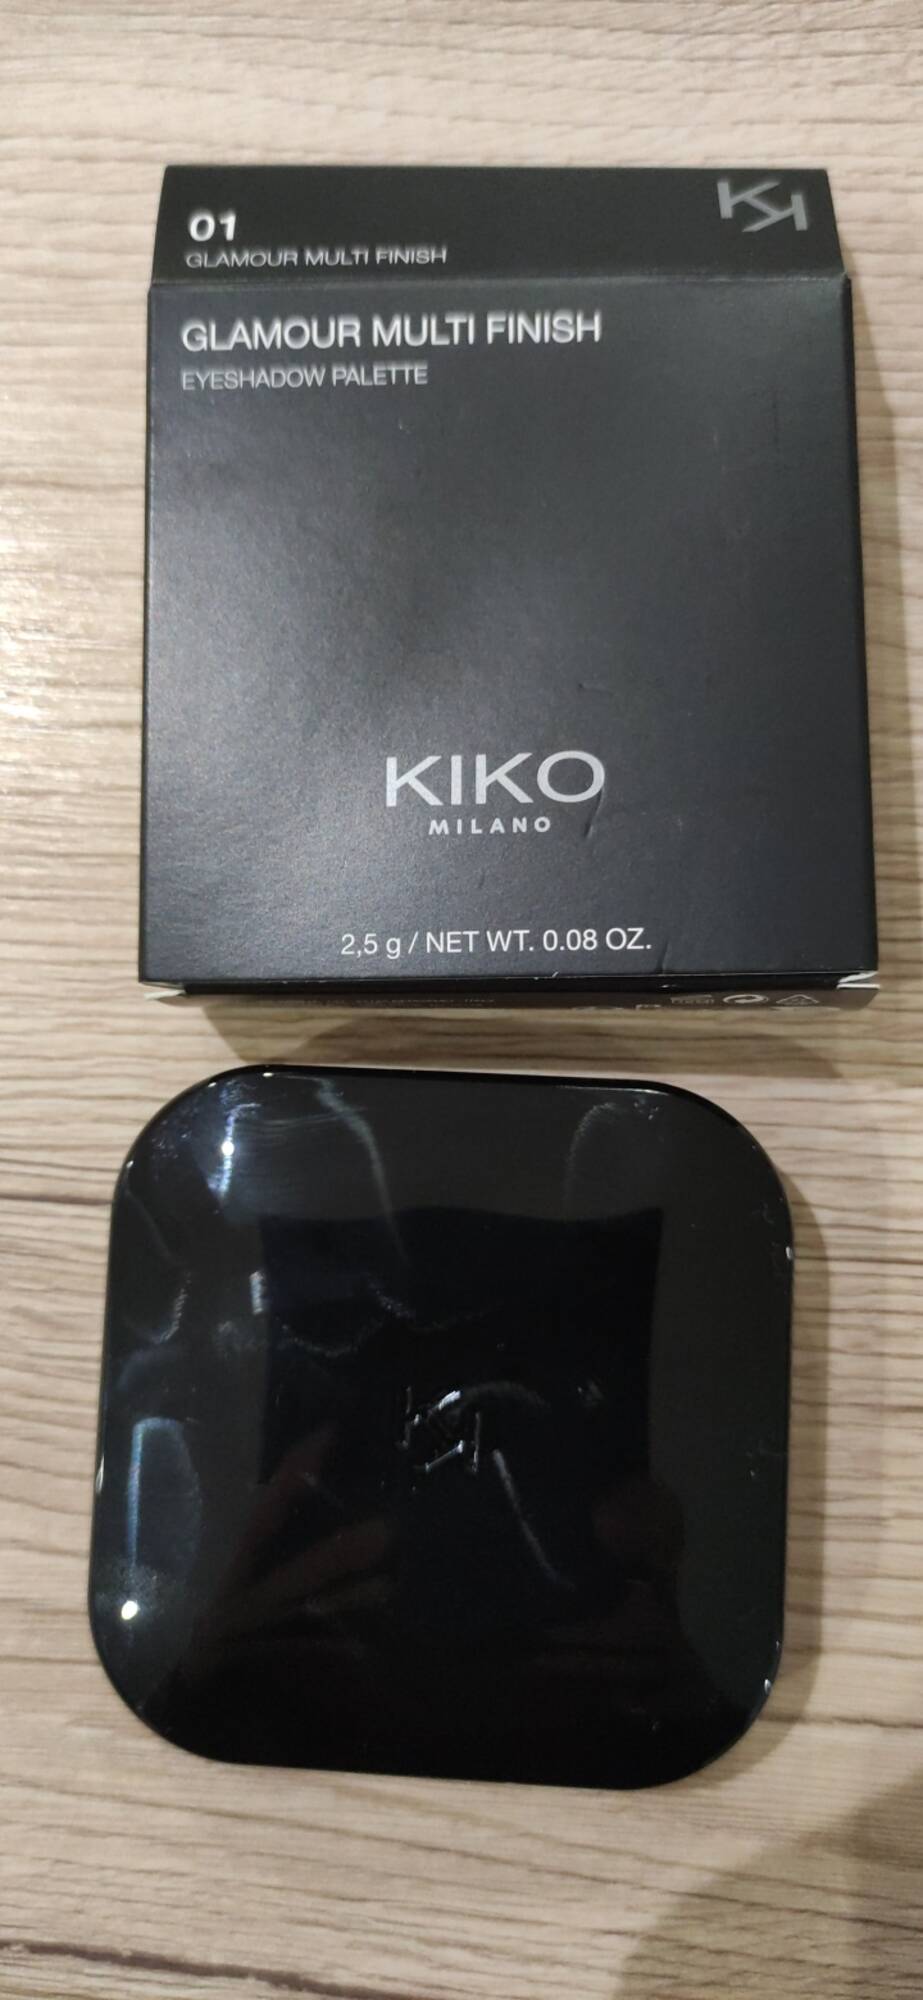 KIKO - Glamour multi finish - Eyeshadow palette